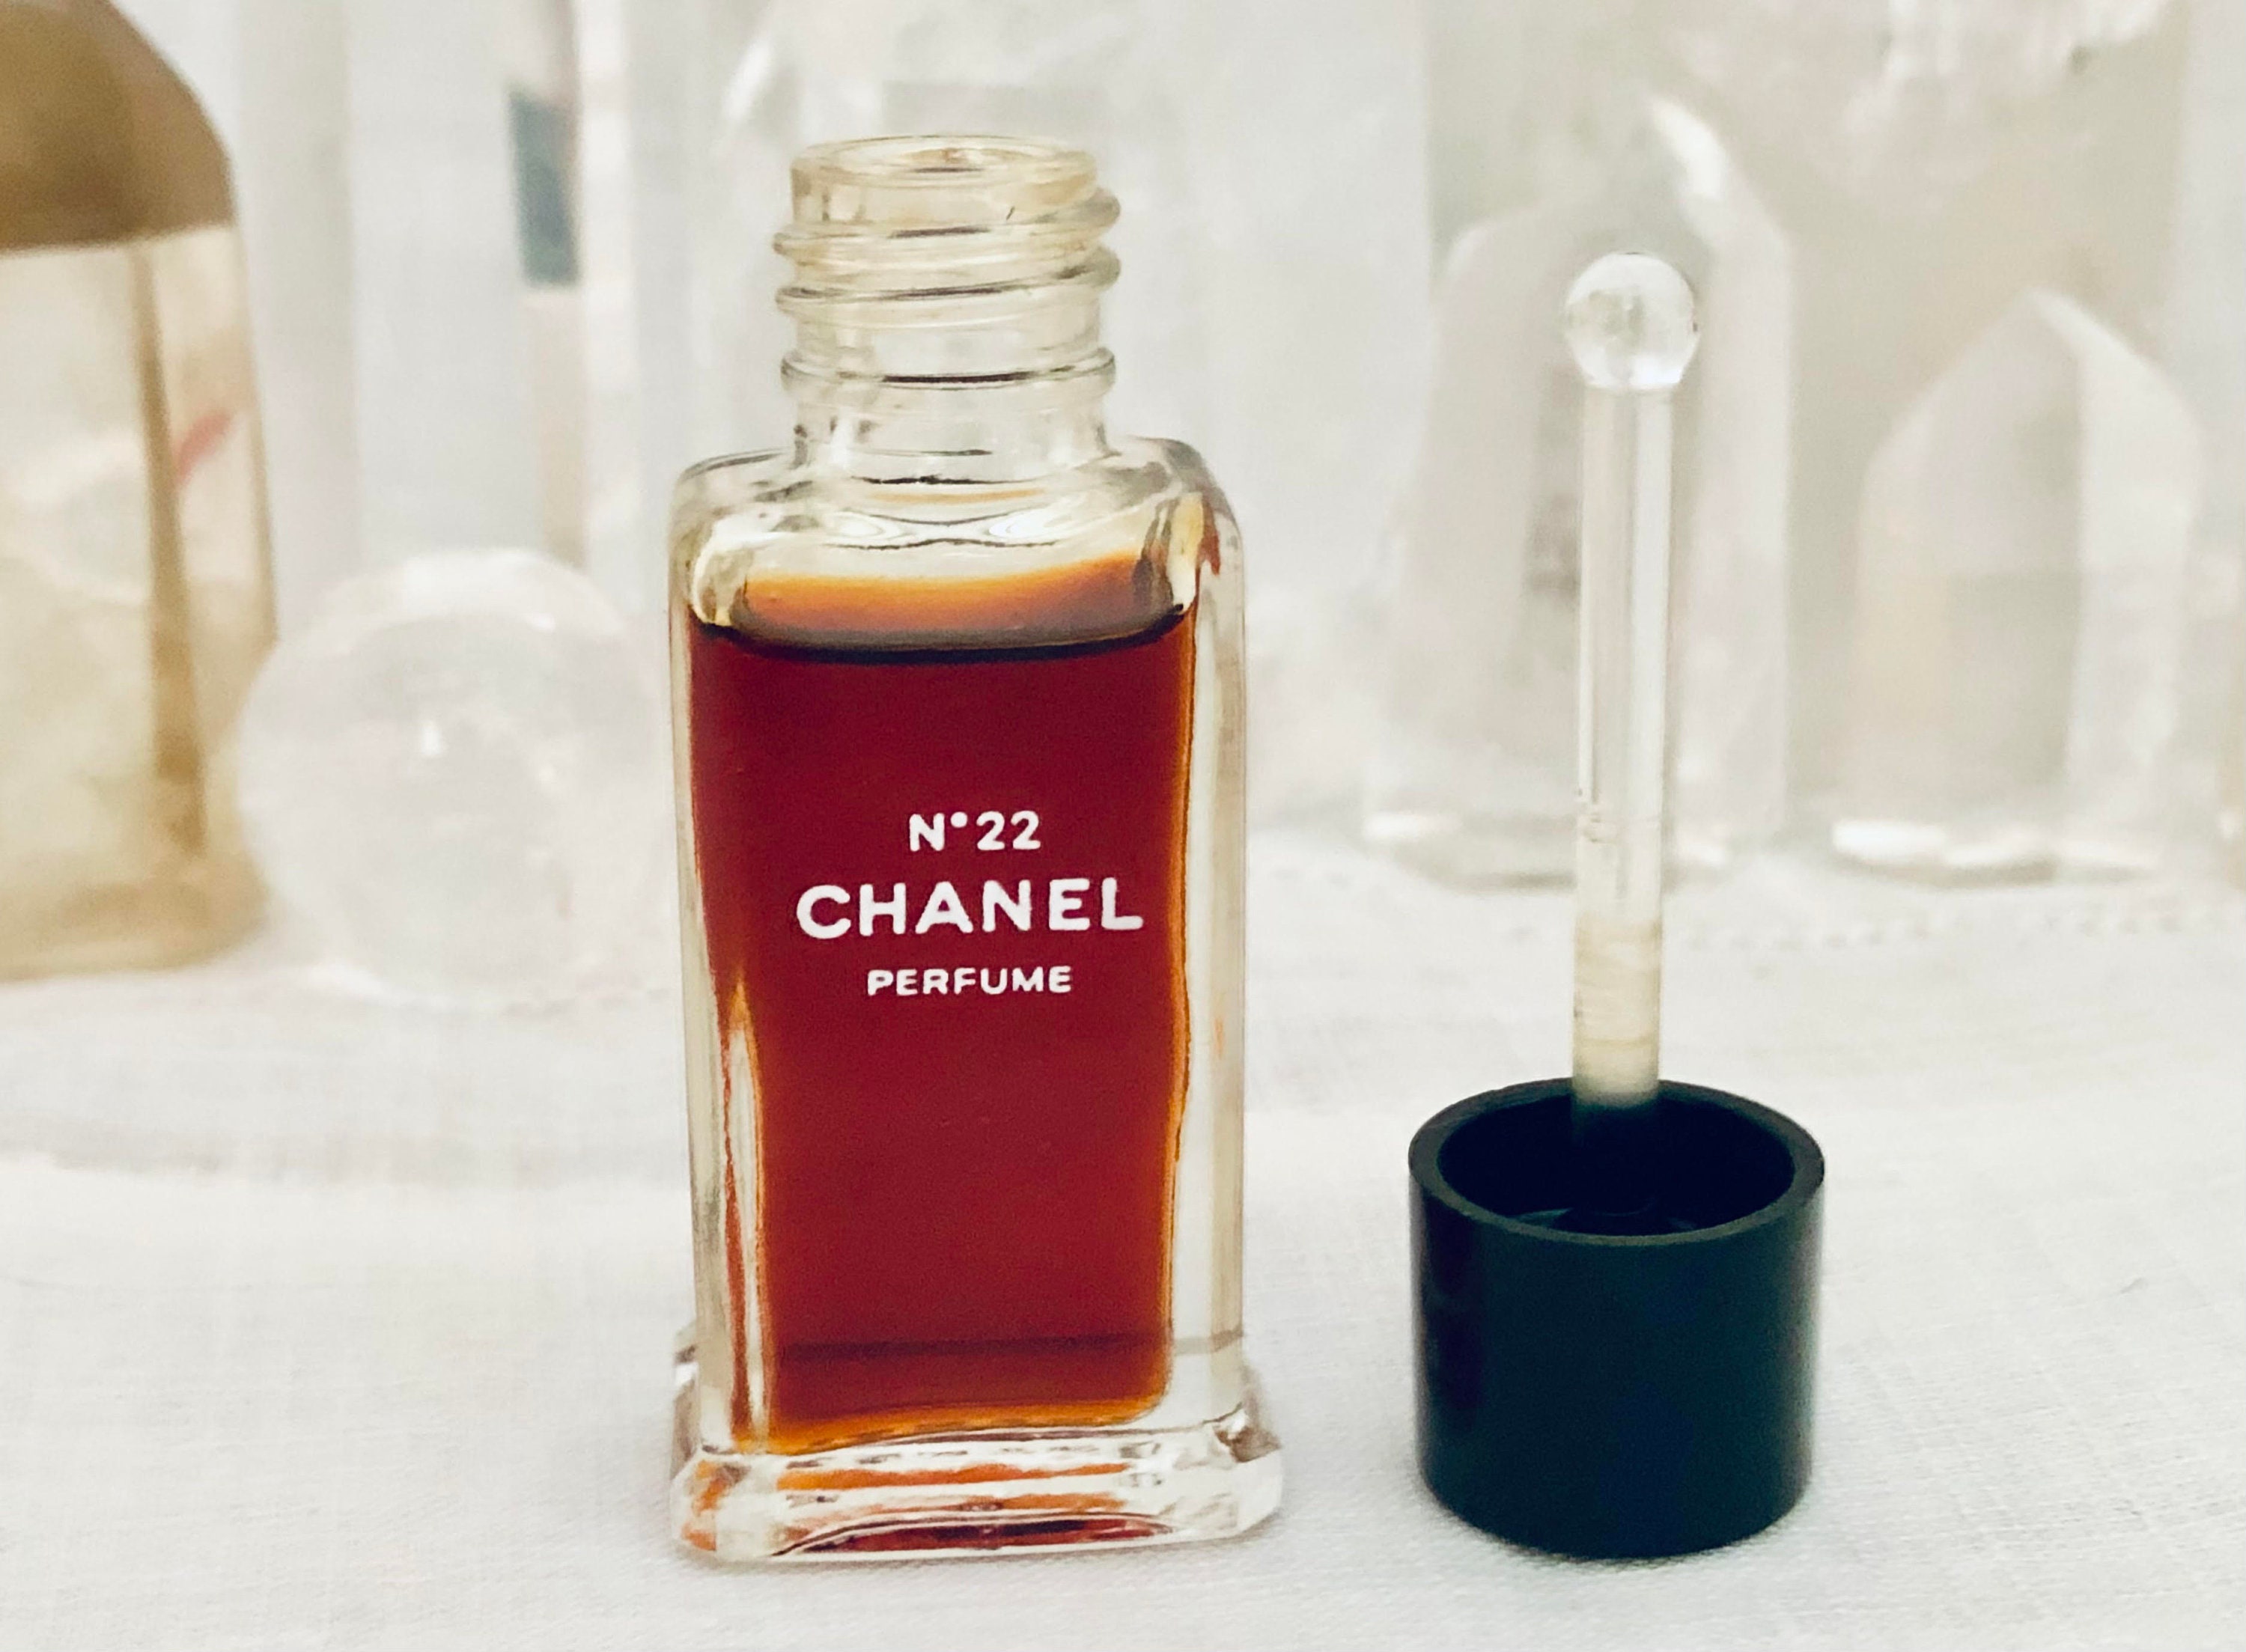 Chanel No. 22 7.5 Ml. or 0.25oz. Flacon Eau De Toilette 